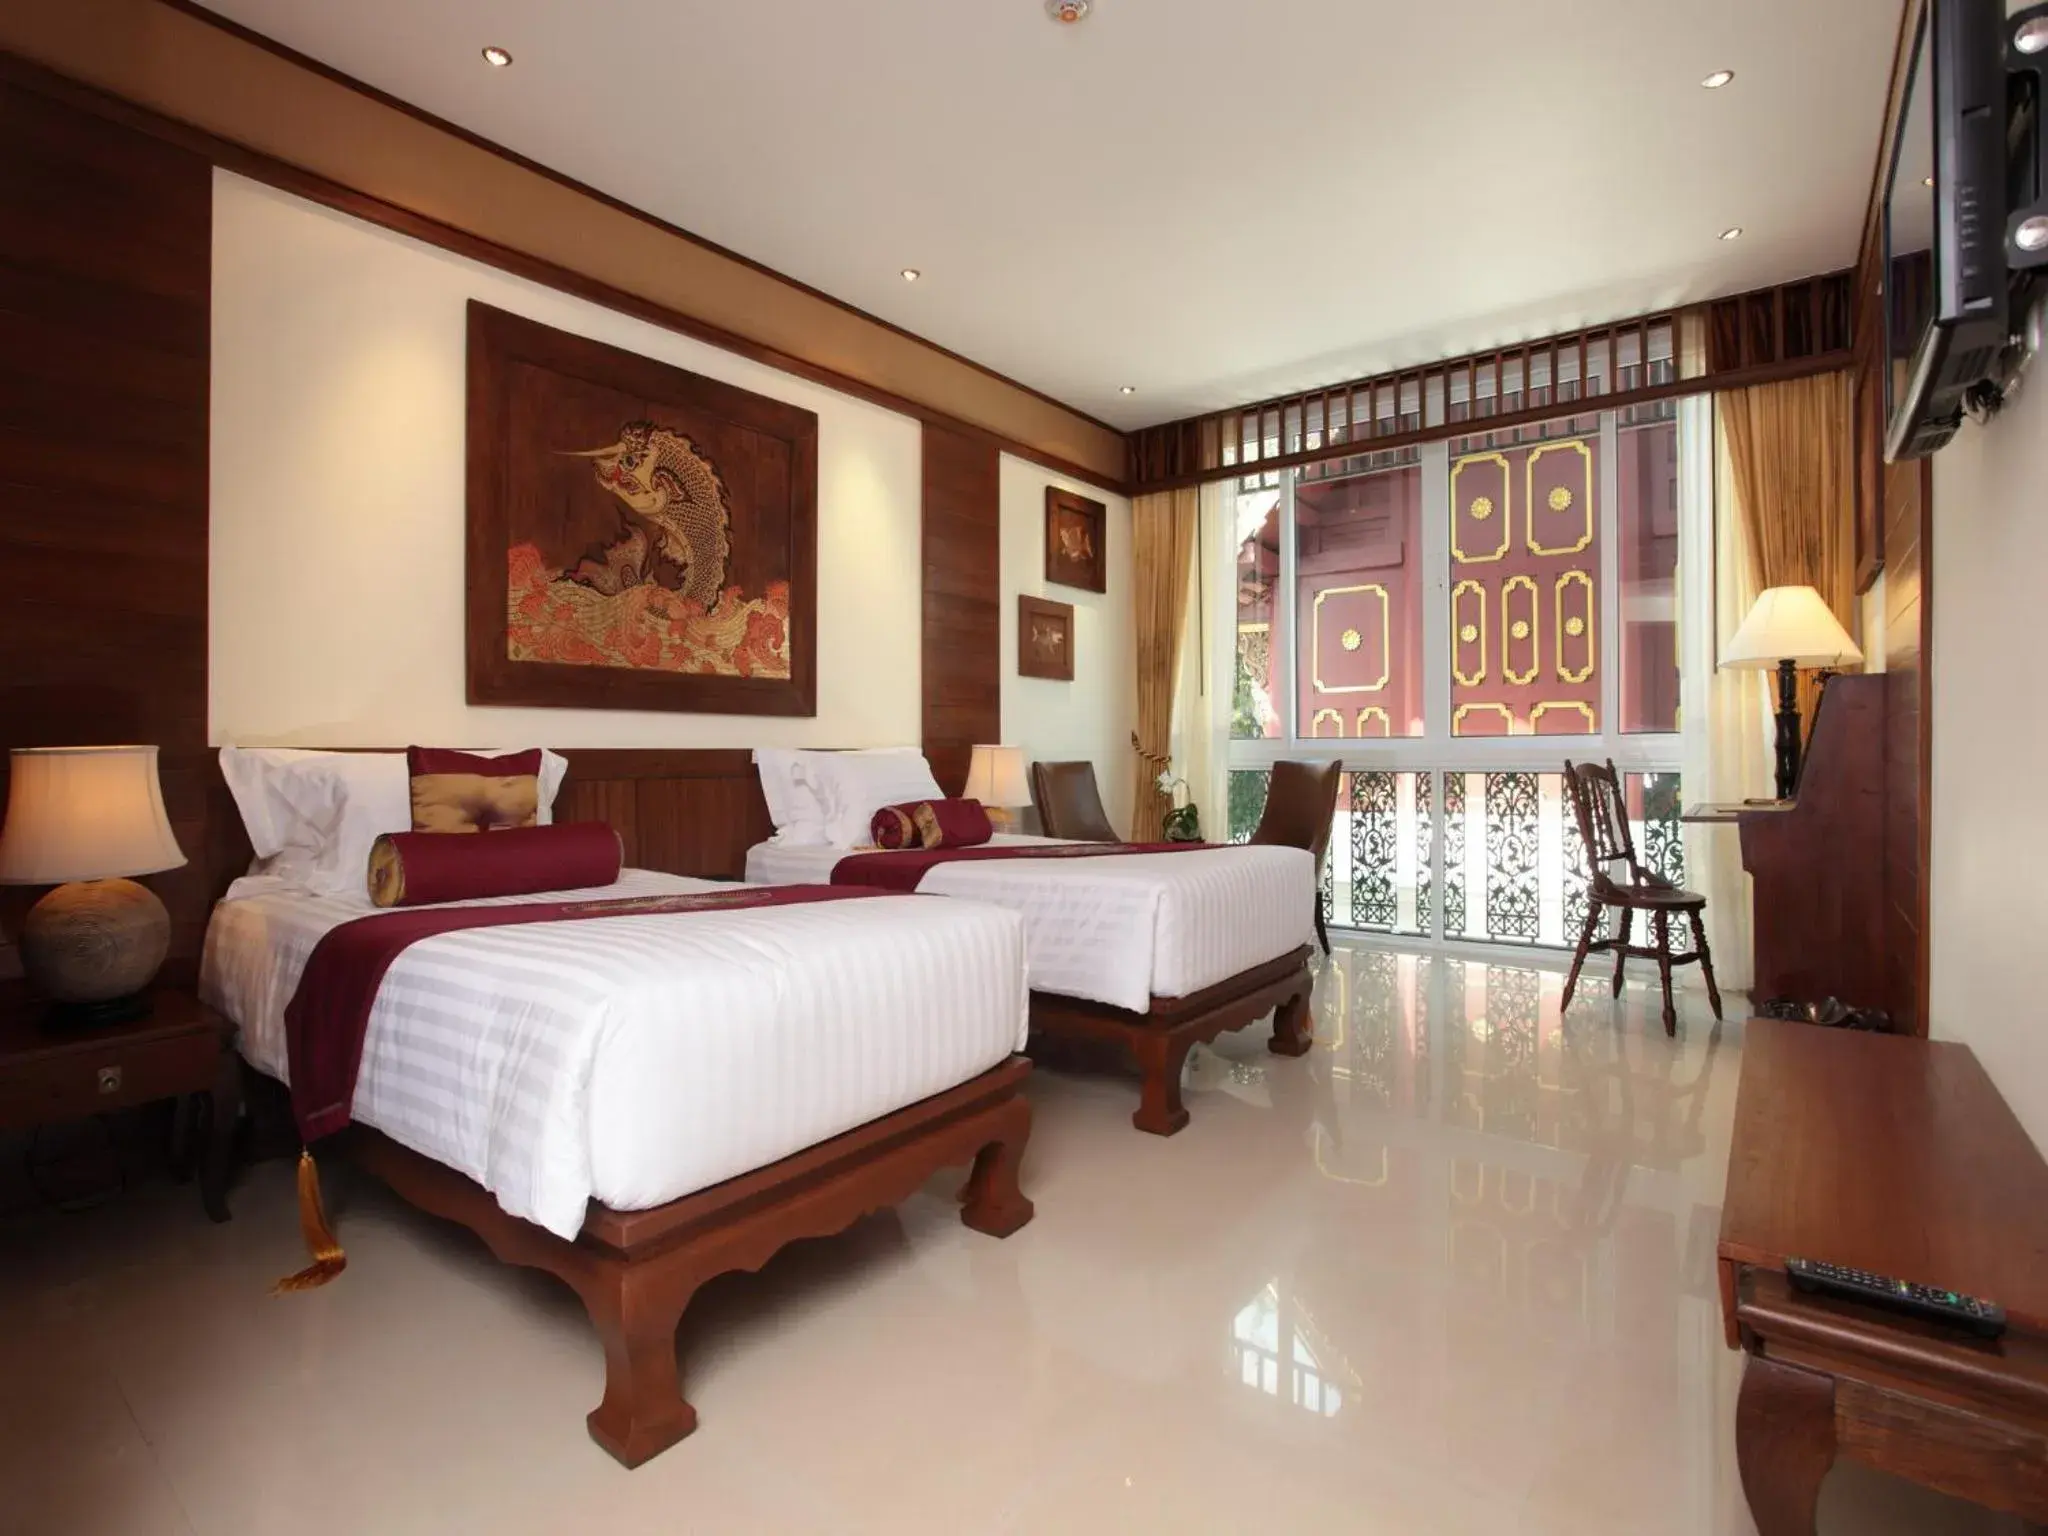 Photo of the whole room in Kodchasri Thani Hotel